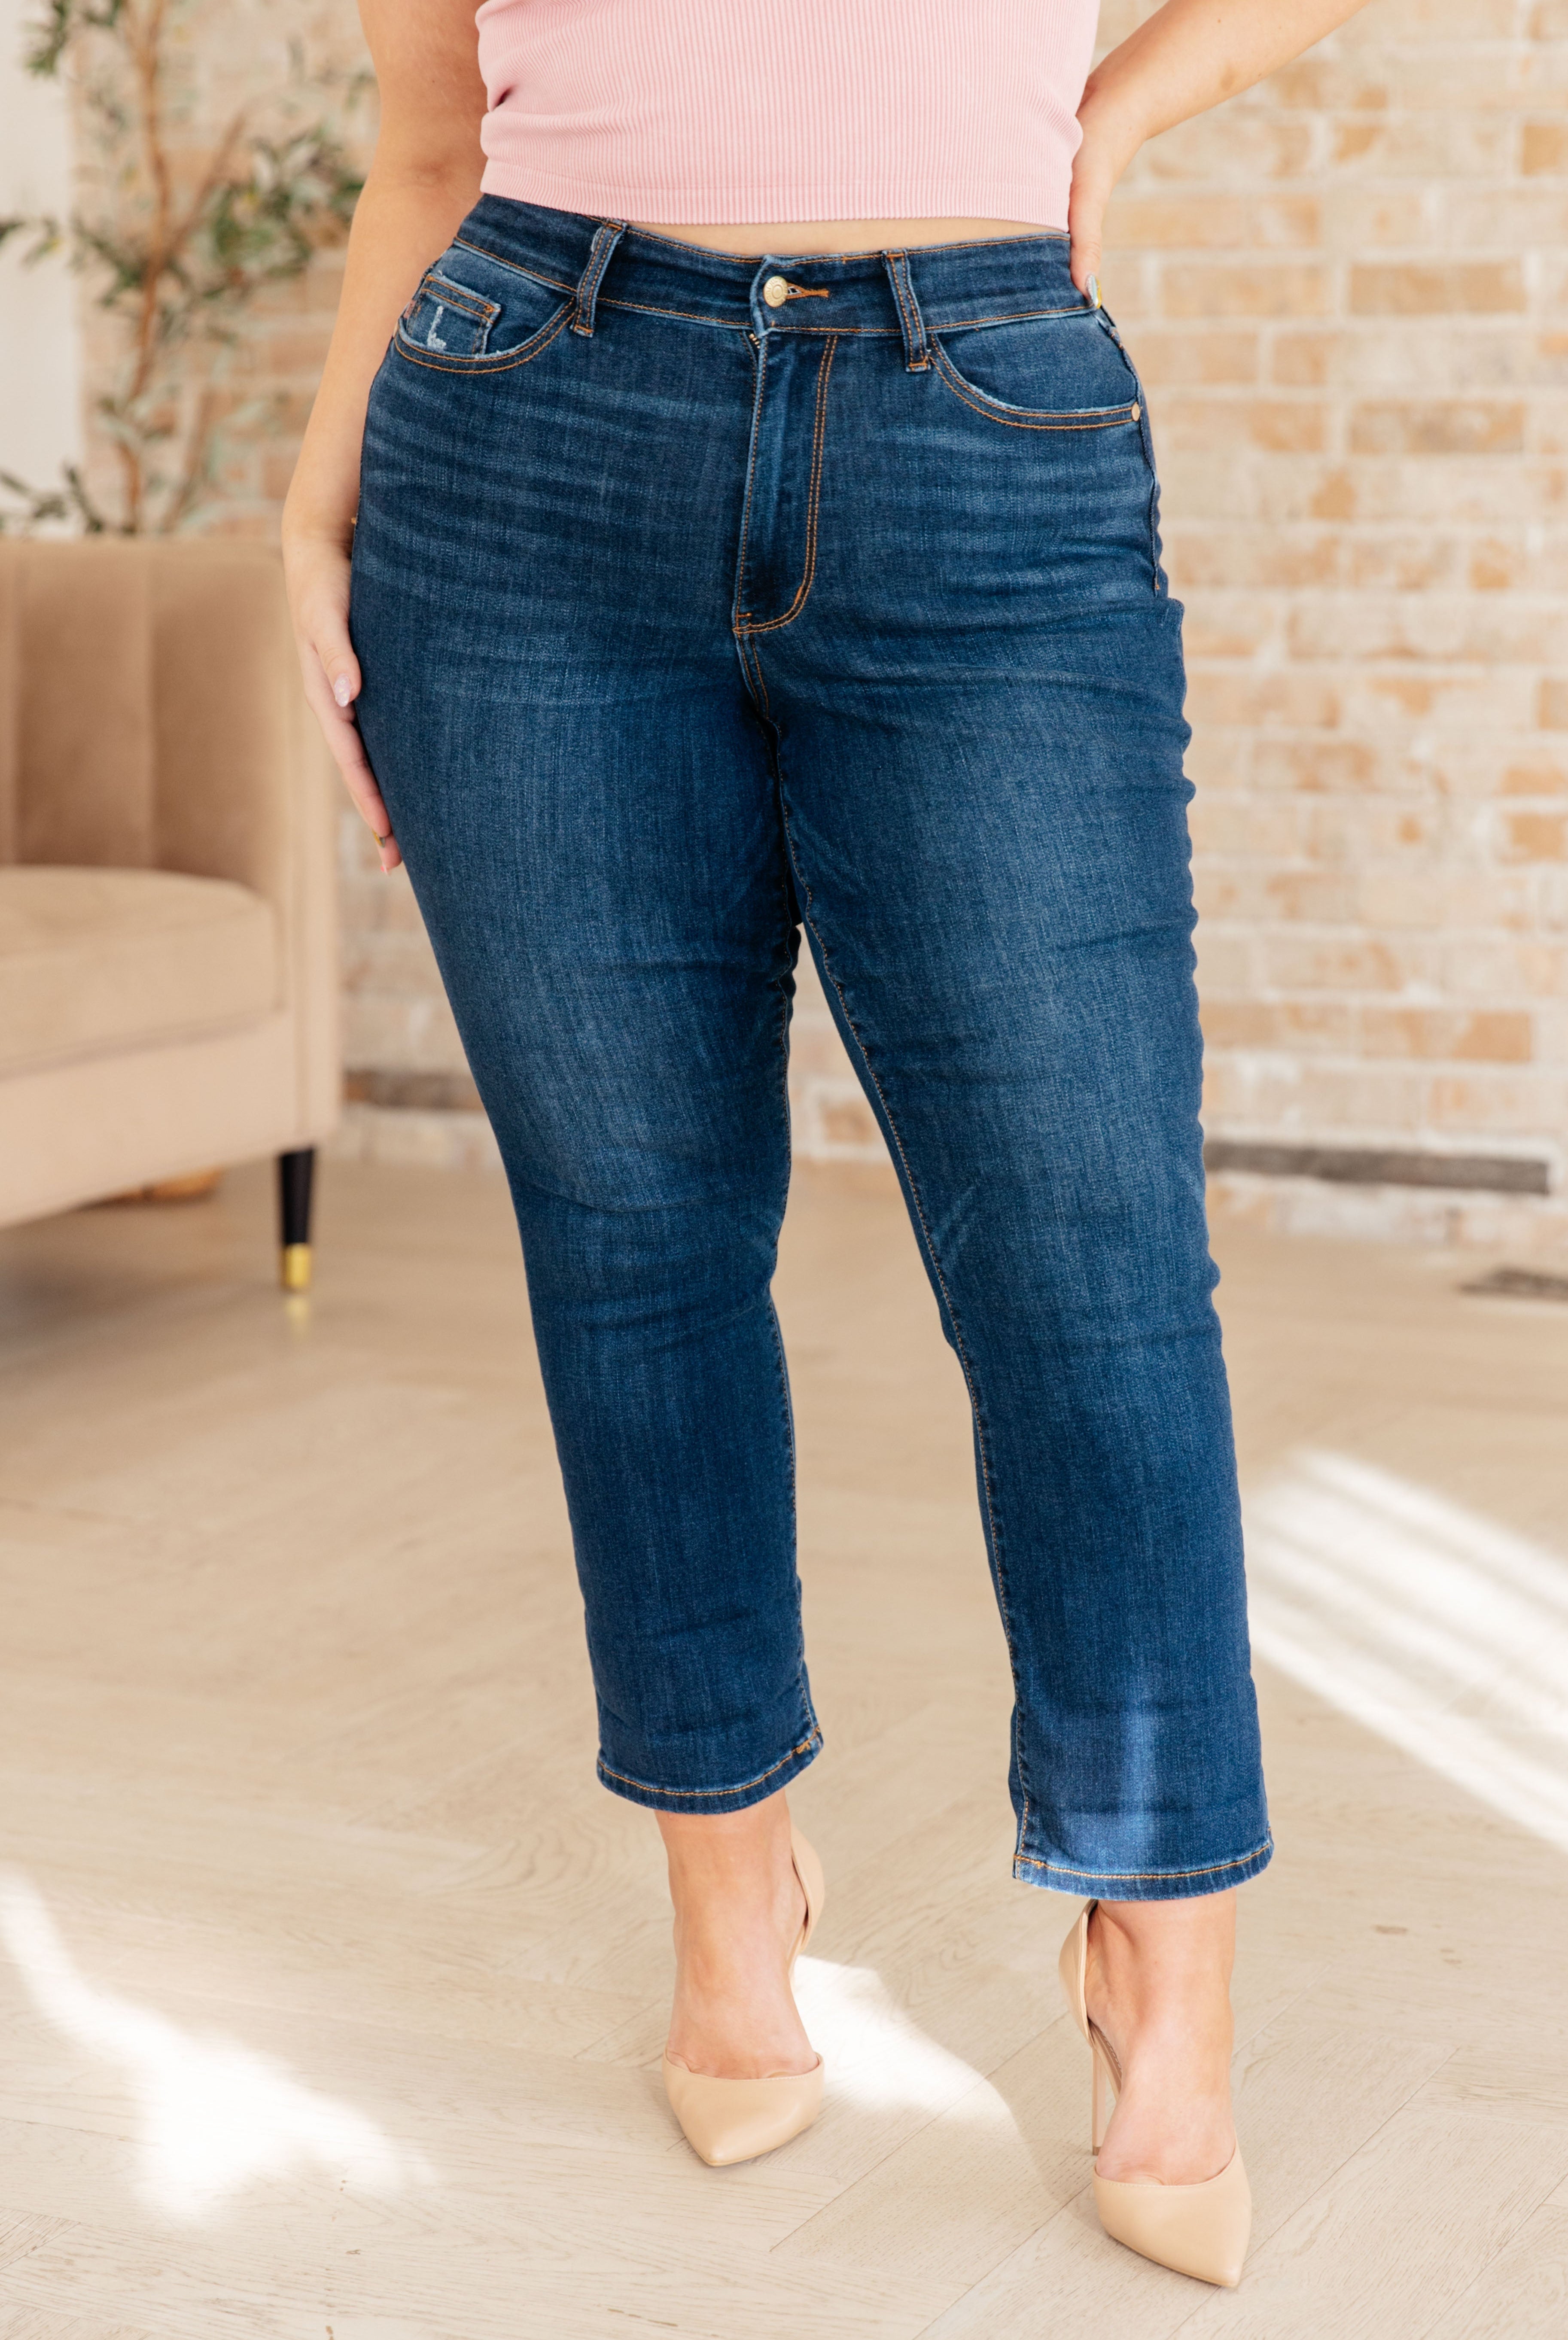 Bette Mid Rise Vintage Cuffed Skinny Capri-Jeans-Krush Kandy, Women's Online Fashion Boutique Located in Phoenix, Arizona (Scottsdale Area)